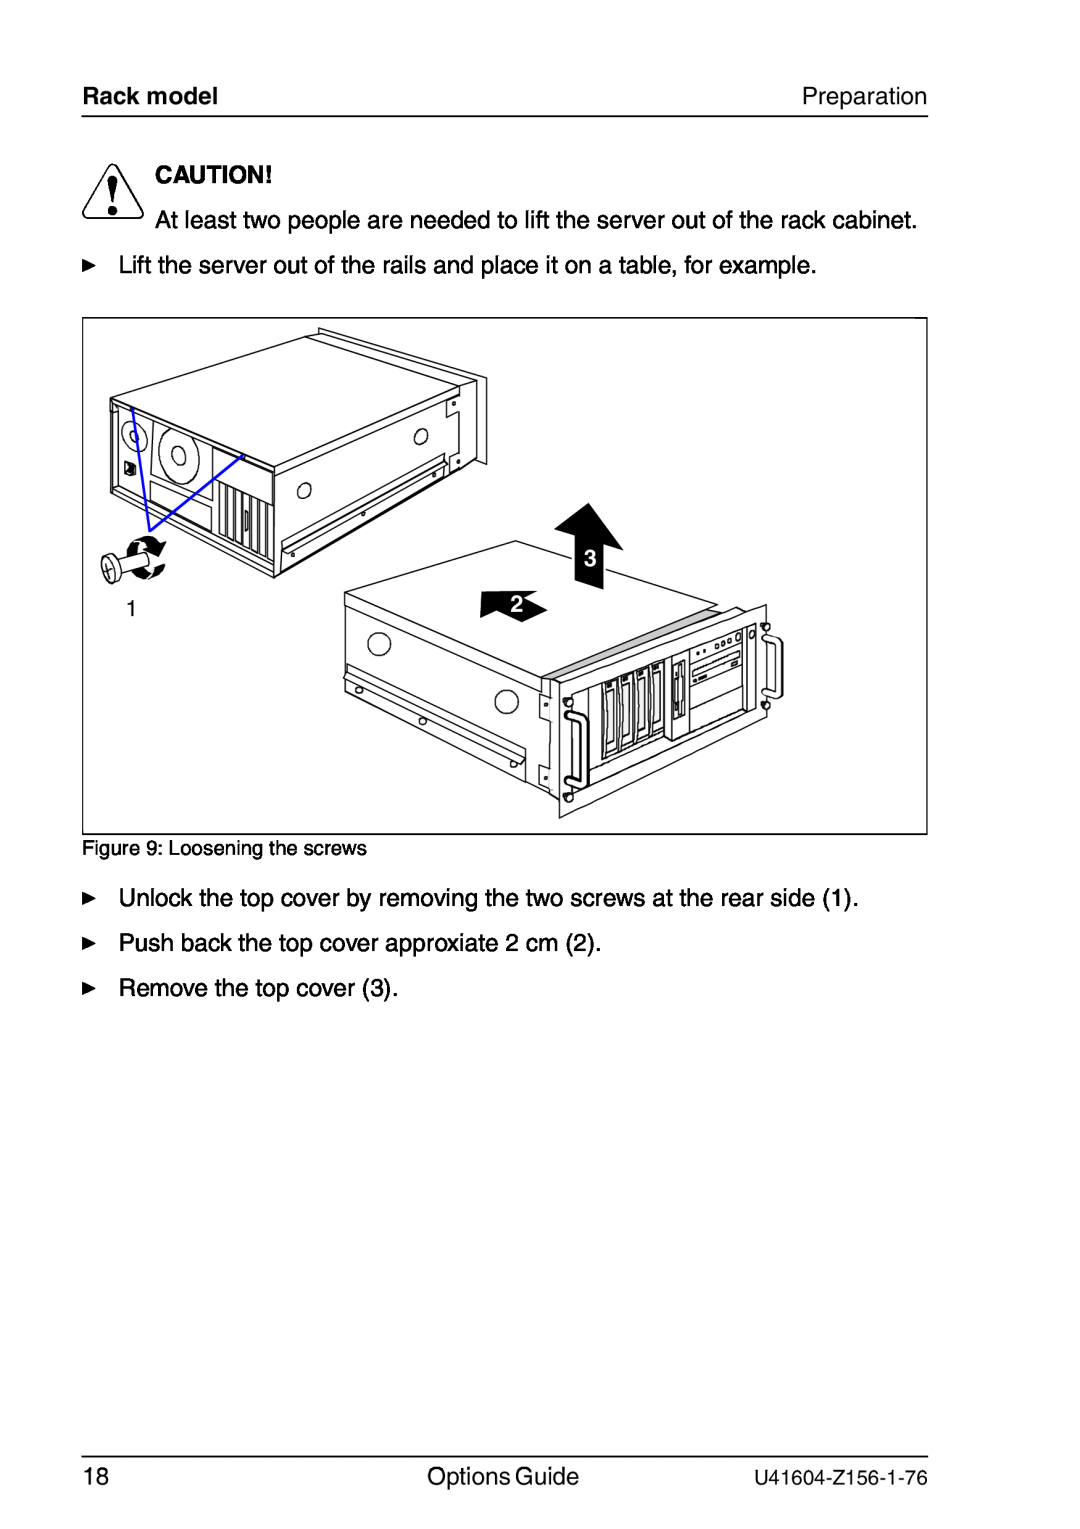 Fujitsu TX150 S3 manual Rack model, V Caution, Preparation, Loosening the screws 